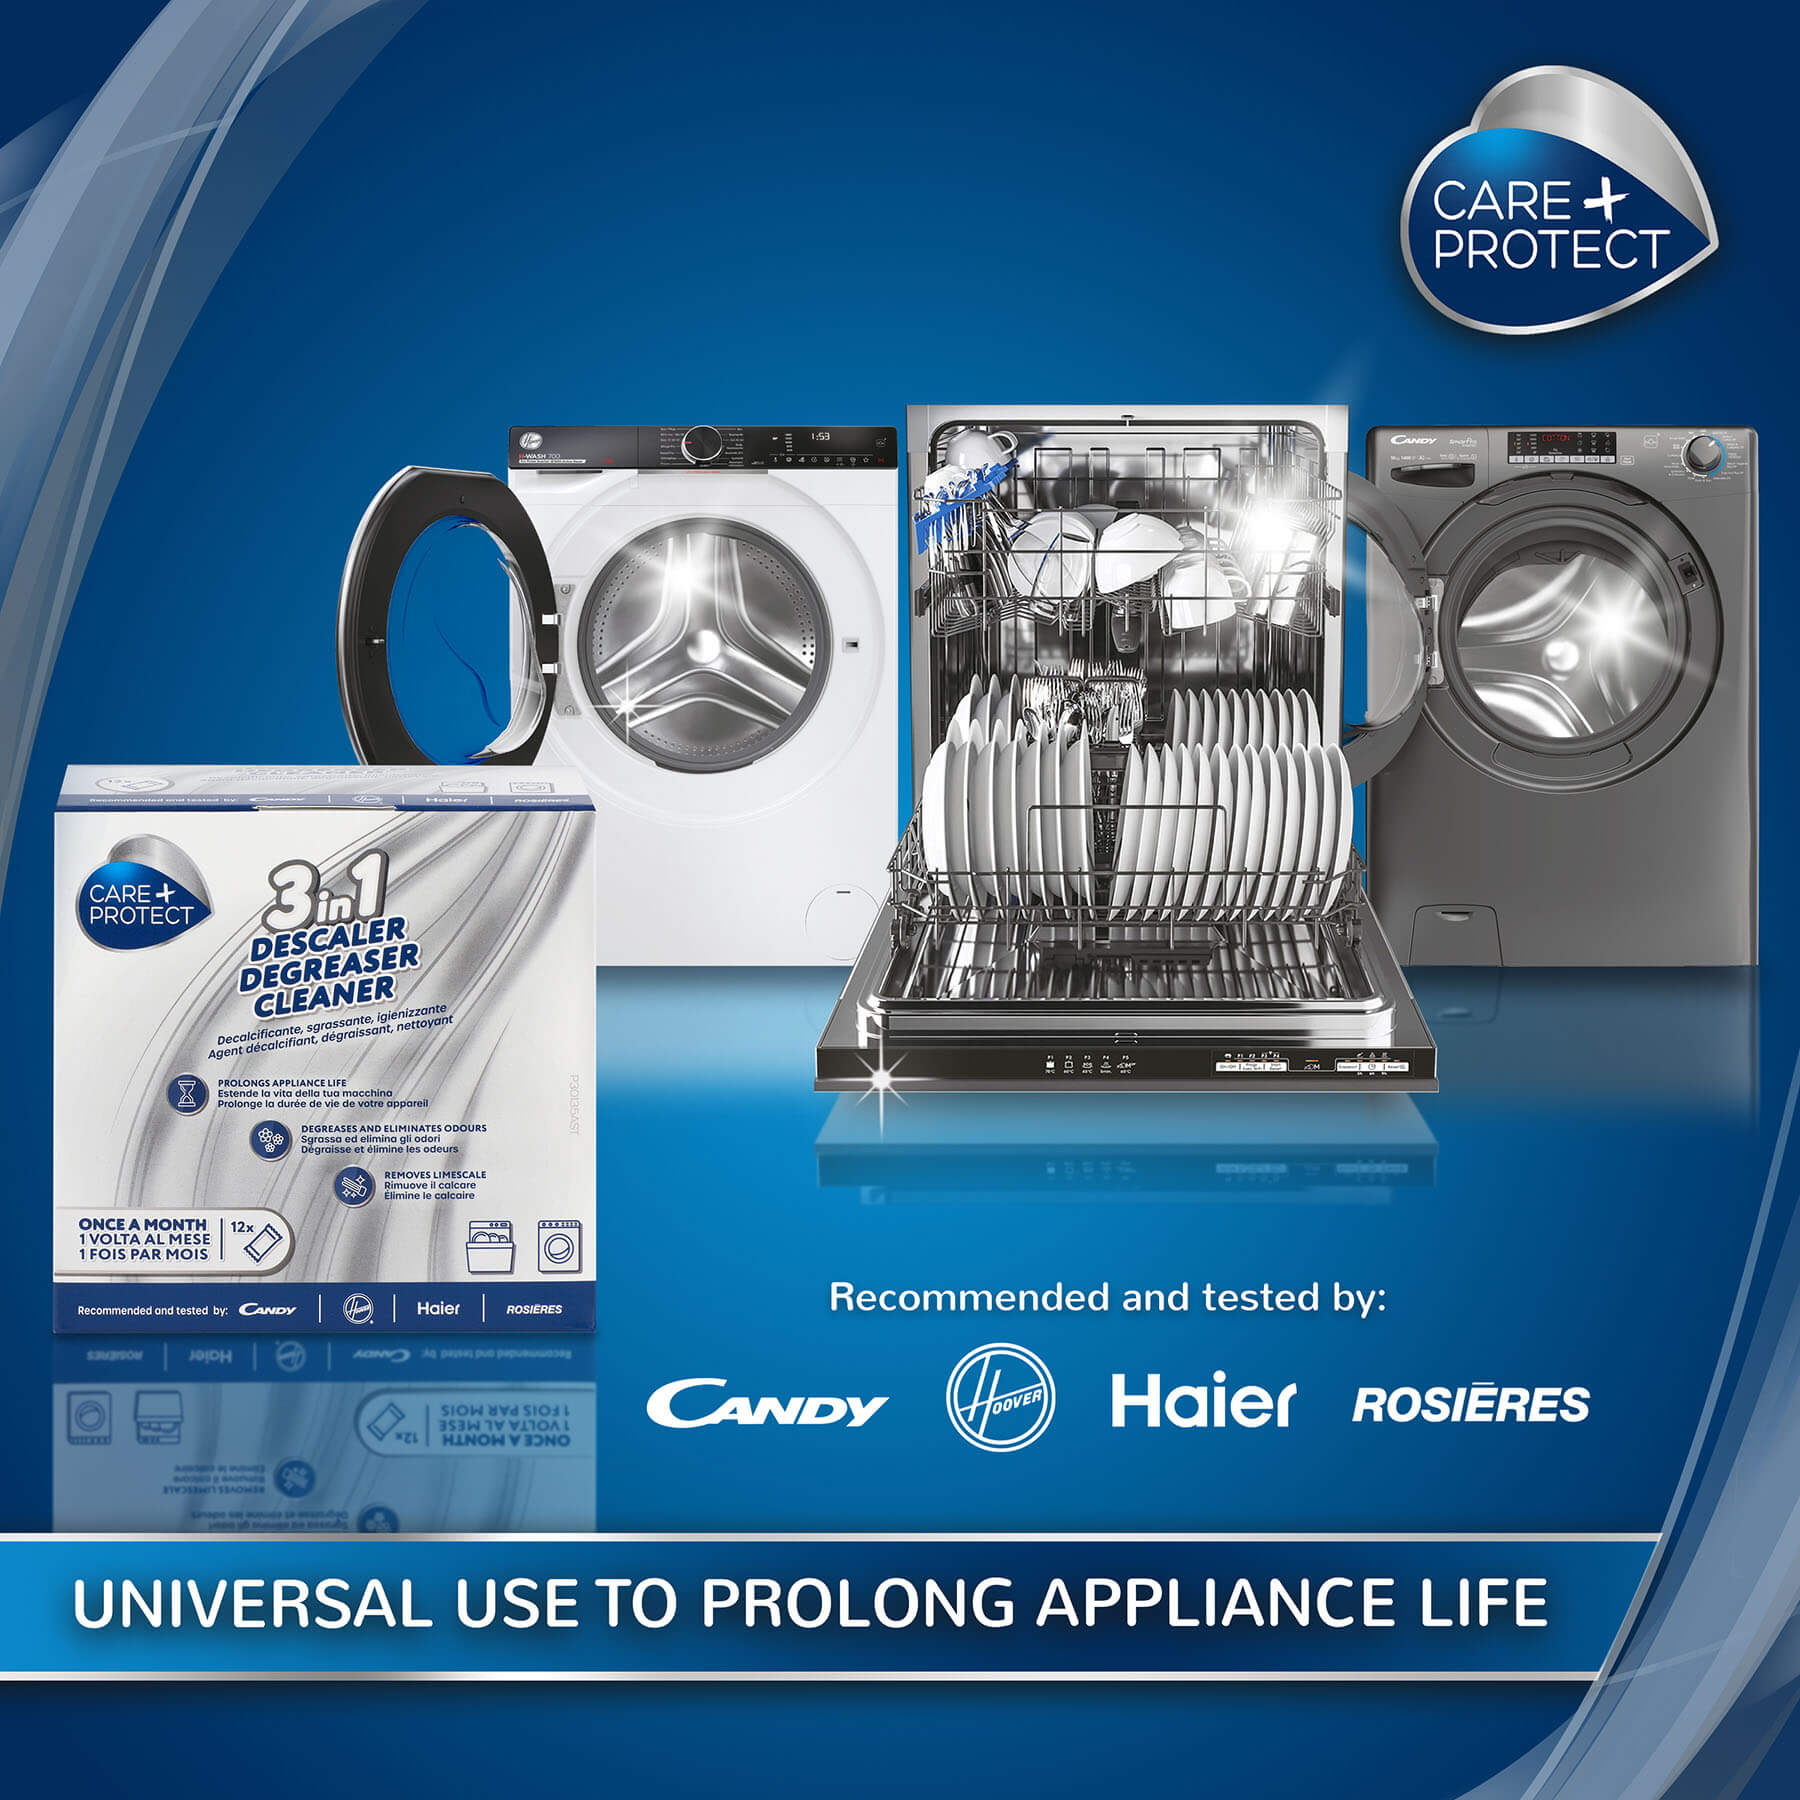 Universal Use To Prolong Appliance Life